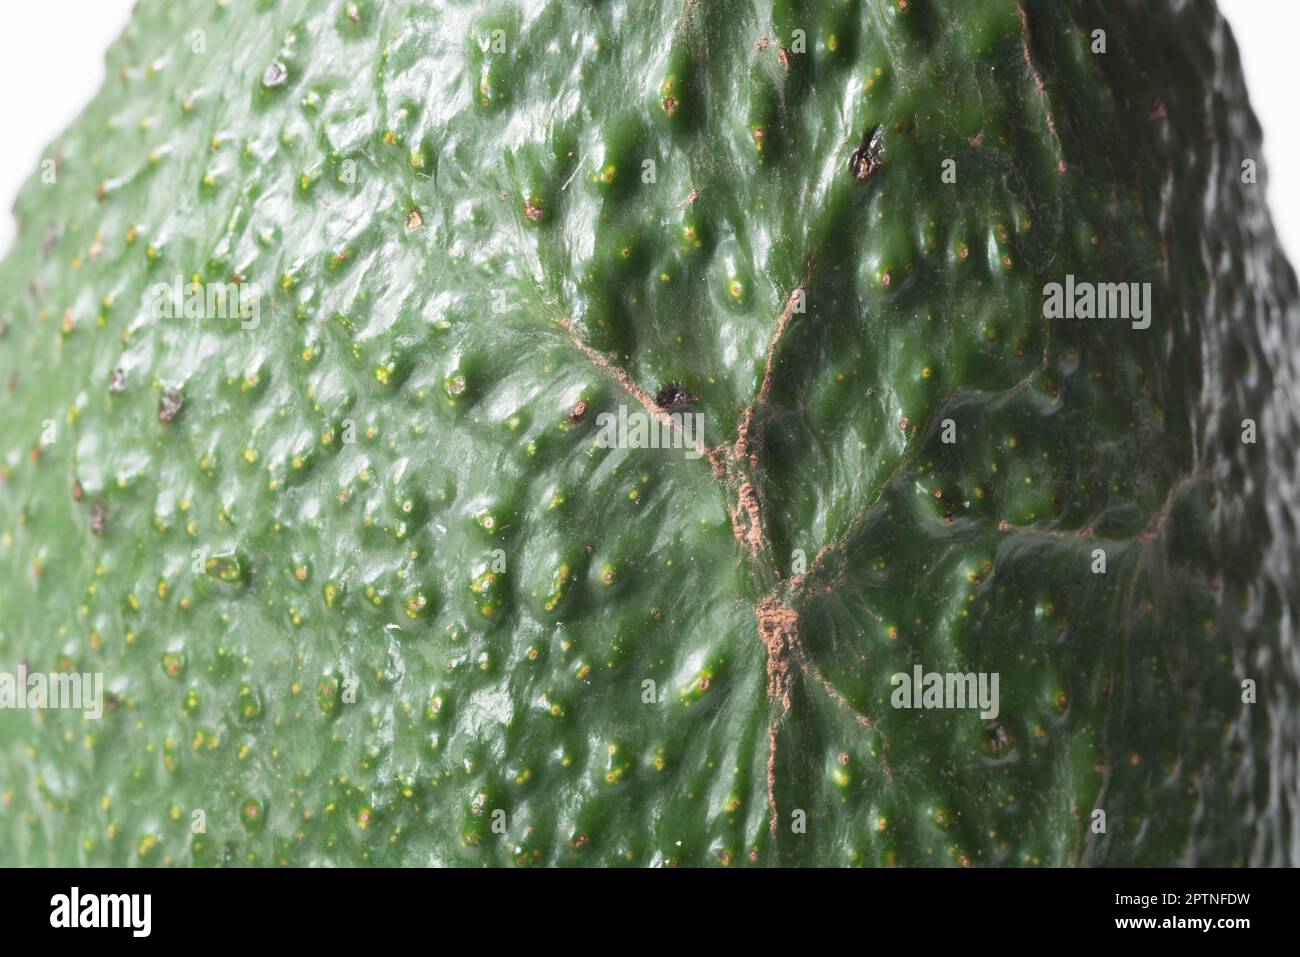 textura creata con la buccia de aguacate, el dettaglio dell'aguacate, un bel frutto verde Foto de stock